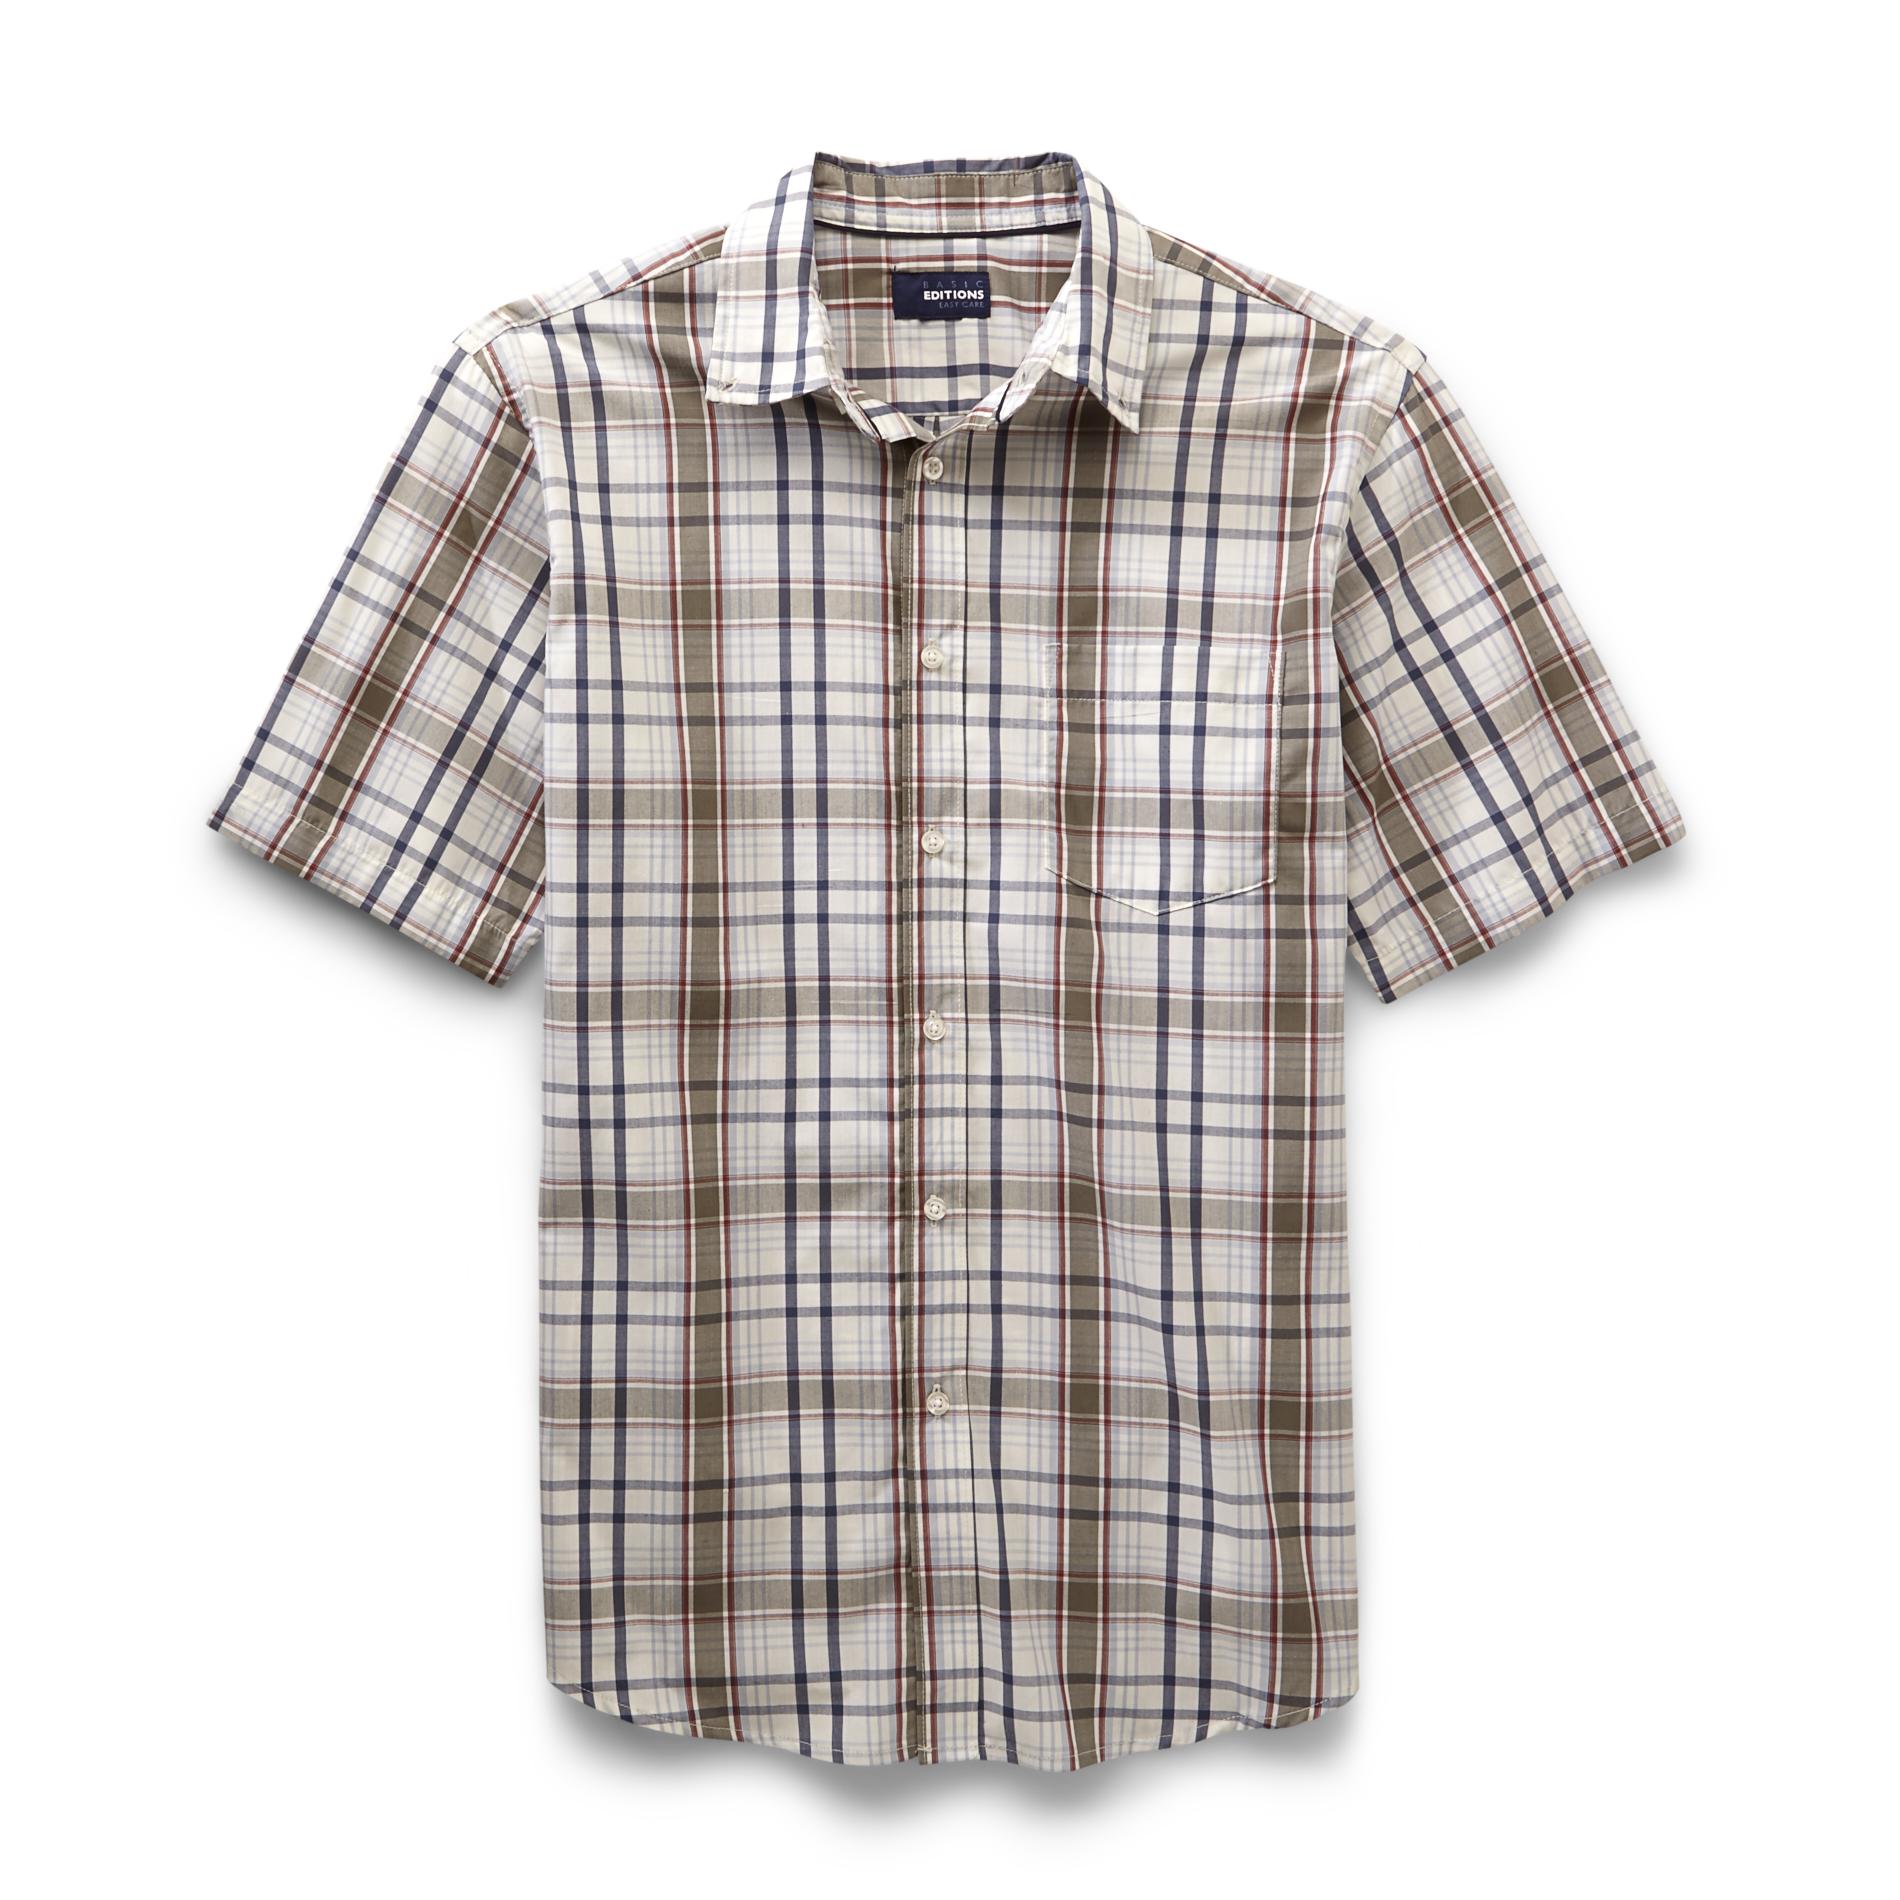 Basic Editions Men's Big & Tall Button-Front Shirt - Plaid